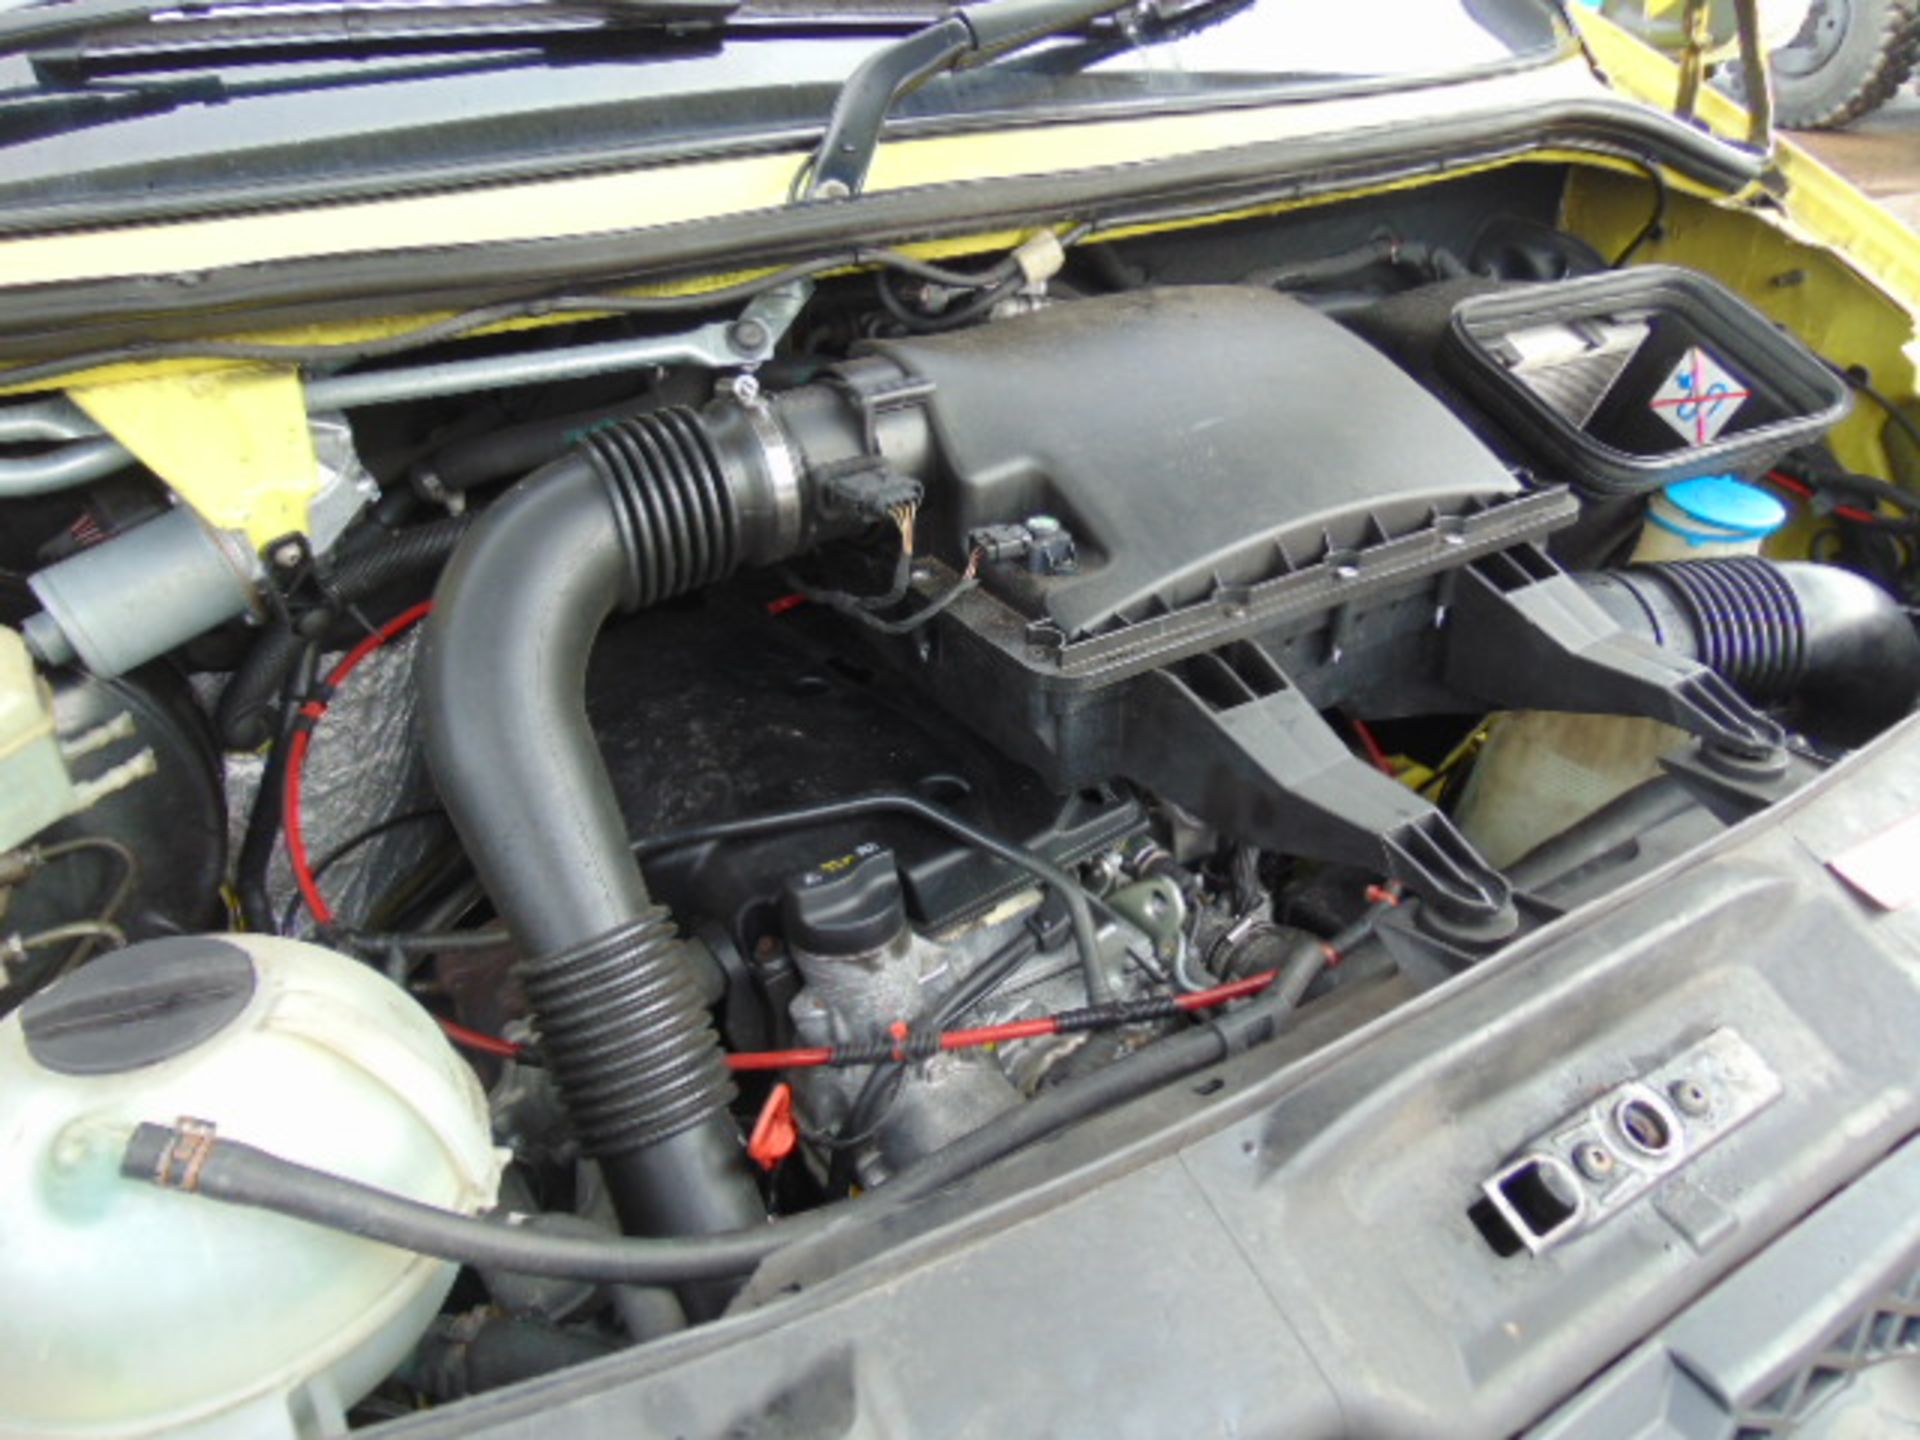 Mercedes Sprinter 515 CDI Turbo diesel ambulance - Image 18 of 18